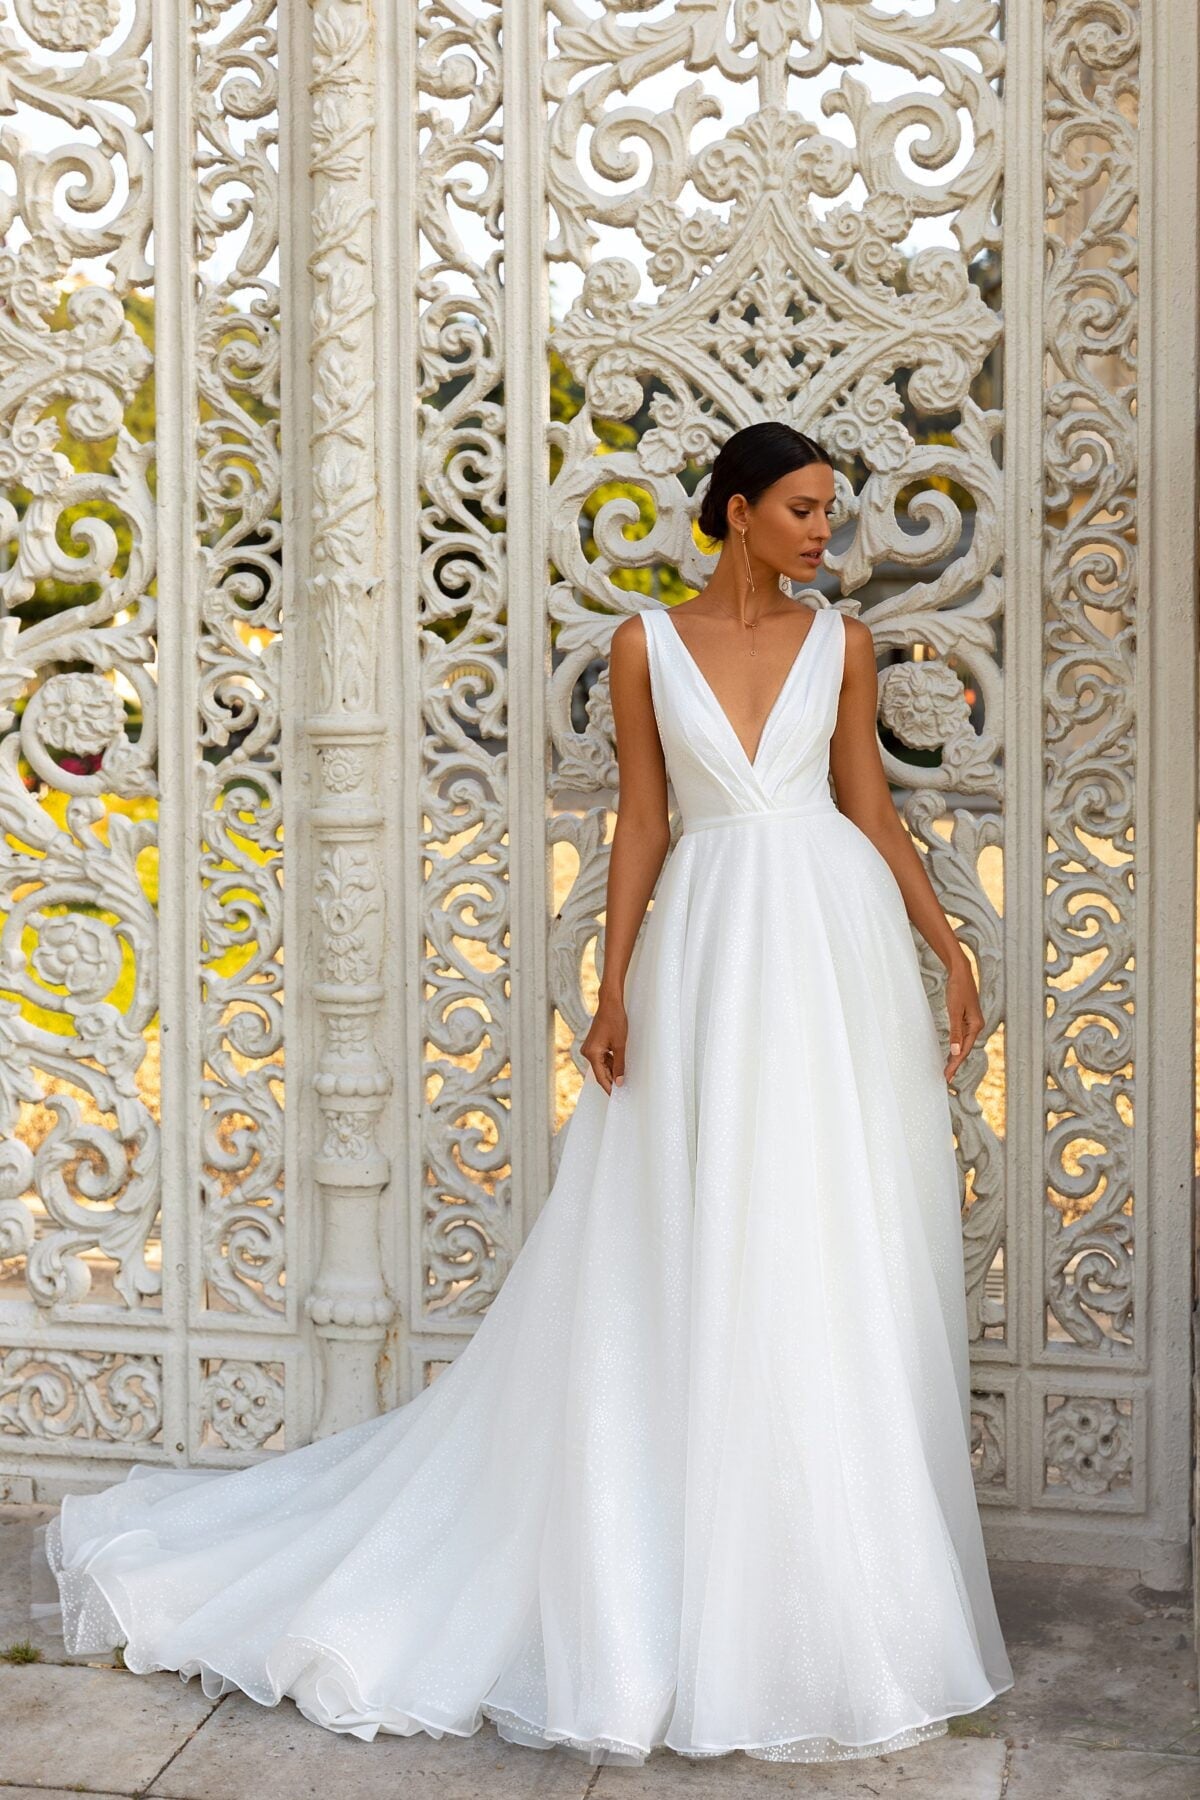 25 Sparkly Wedding Dresses That Captivate